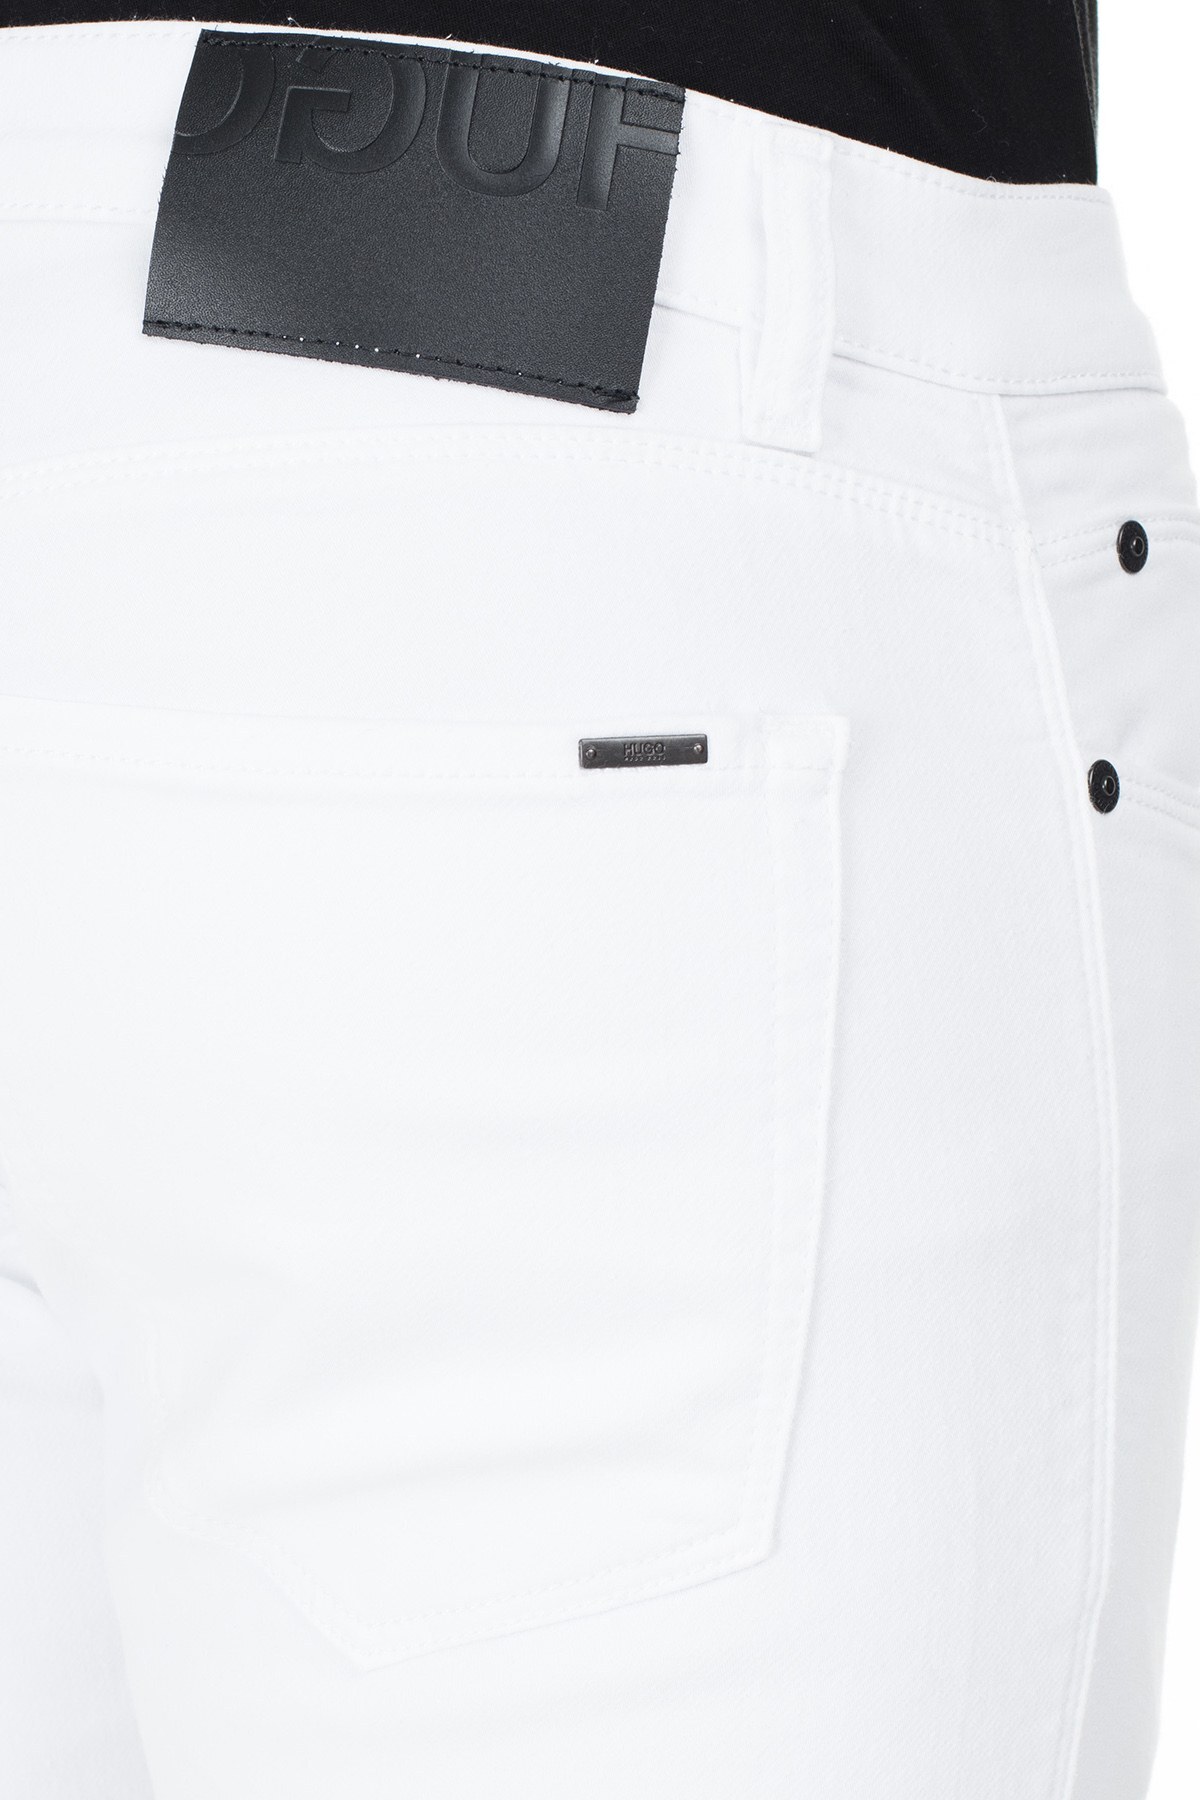 Hugo Boss Slim Fit Jeans Erkek Kot Pantolon 50426705 100 BEYAZ